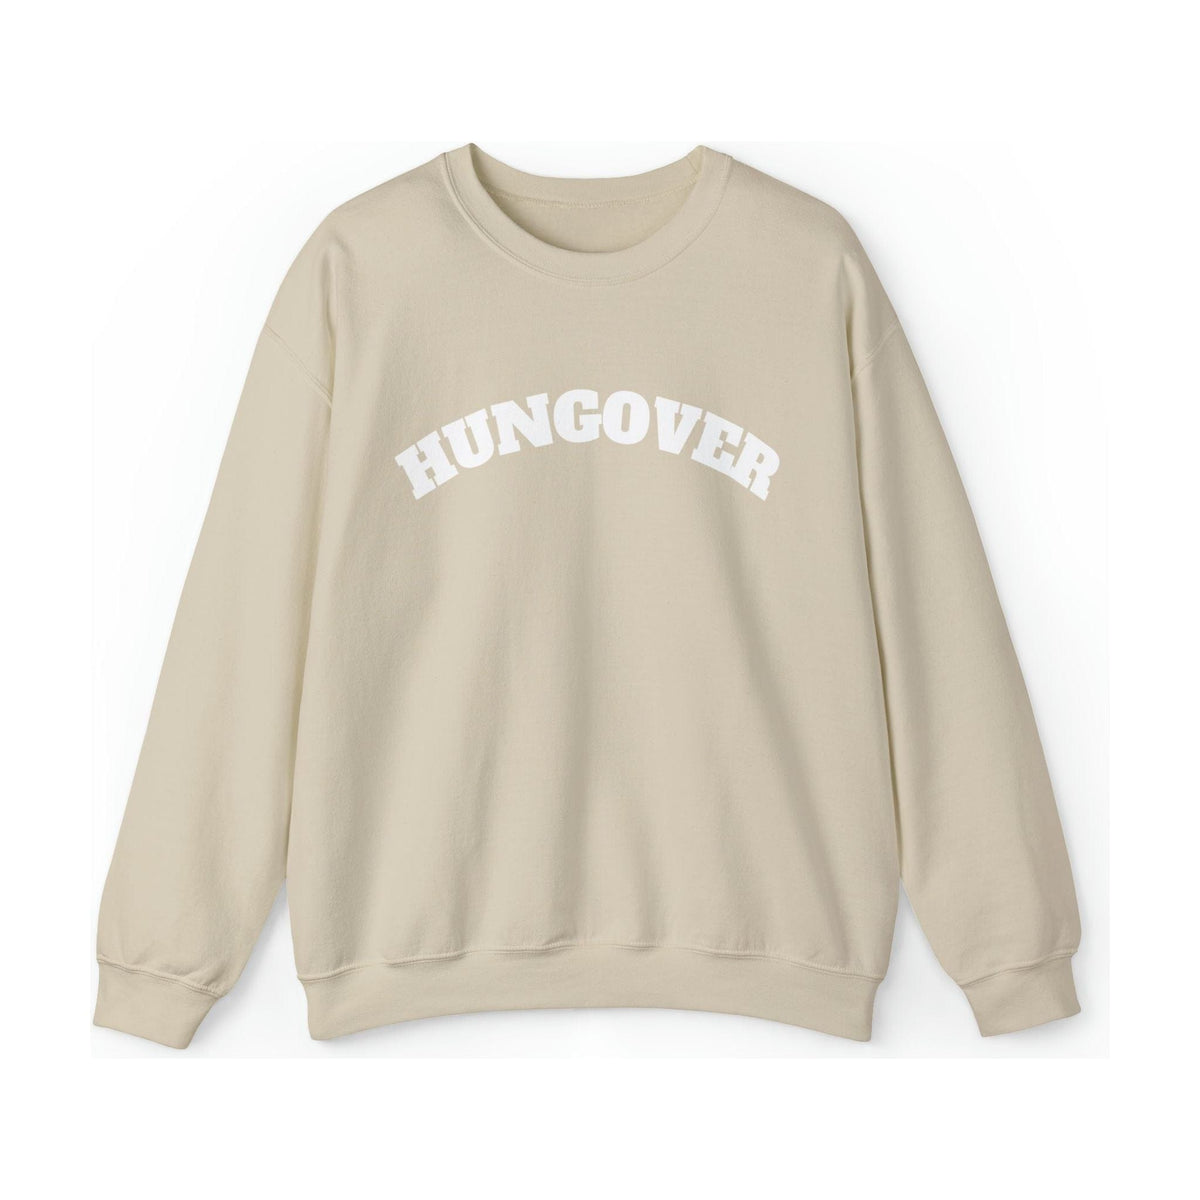 Hungover Sweatshirt | Funny Drinking Gift | Gag Gifts | Jokes Sweatshirt TheFringeCultureCollective